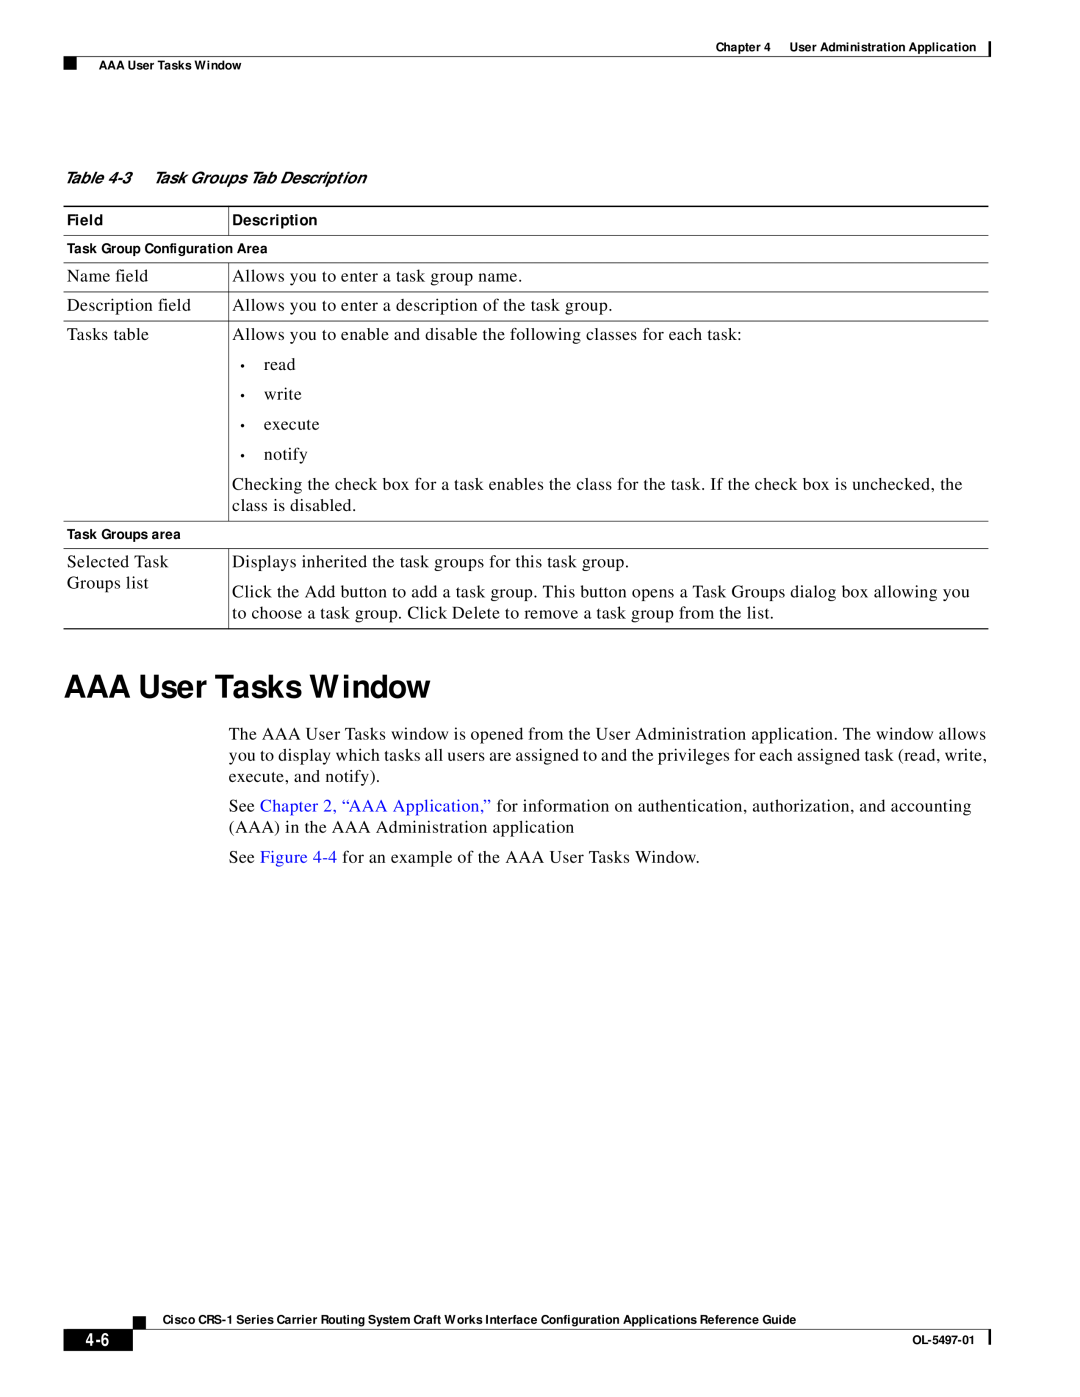 Cisco Systems CRS-1 Series manual AAA User Tasks Window, Field, 3 Task Groups Tab Description 